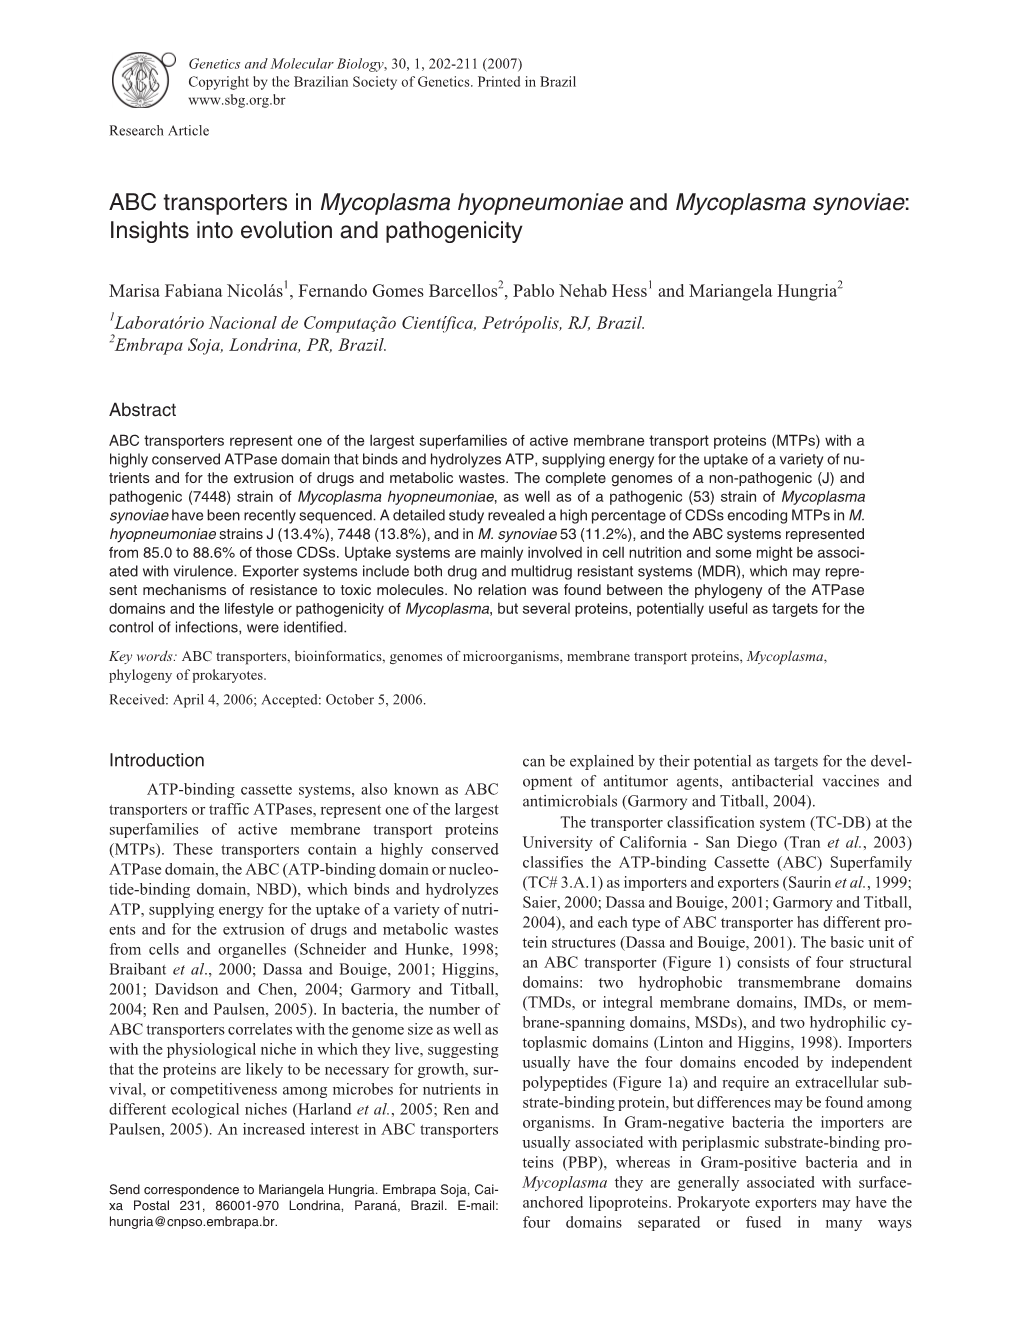 ABC Transporters in Mycoplasma Hyopneumoniae and Mycoplasma Synoviae: Insights Into Evolution and Pathogenicity